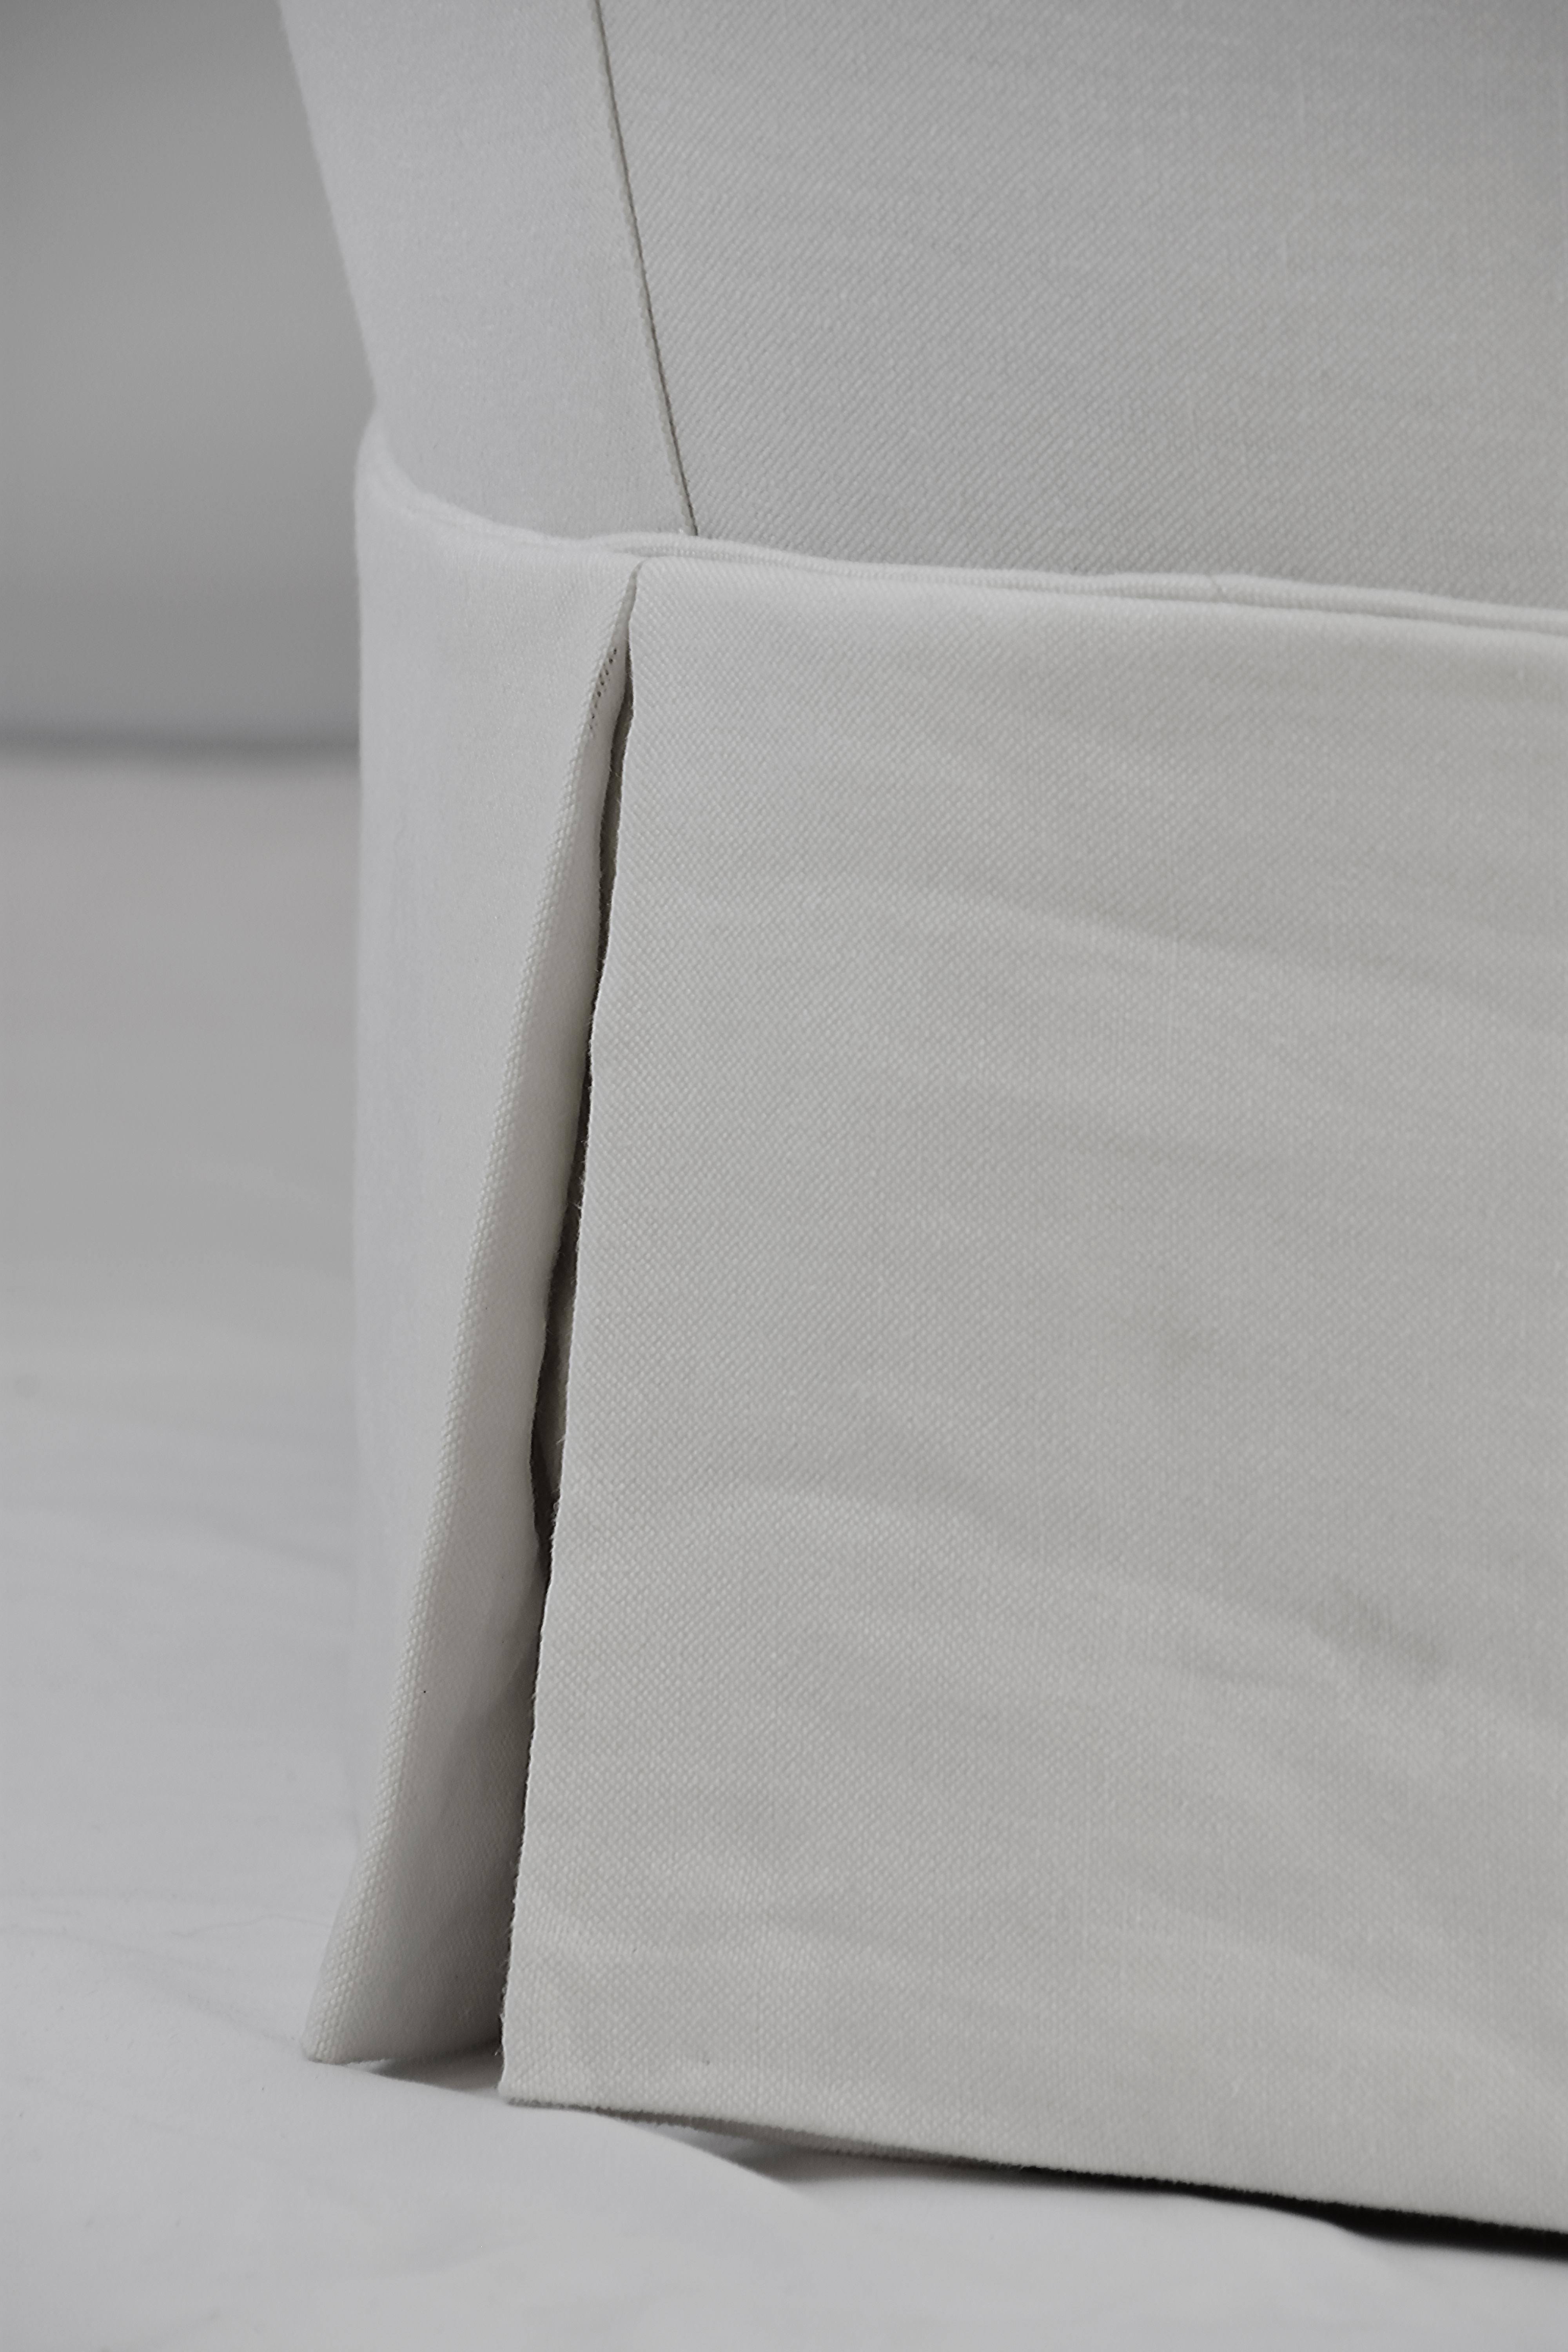 Le Jeune Upholstery St Tropez 2-Seat Sofa Showroom Model For Sale 6